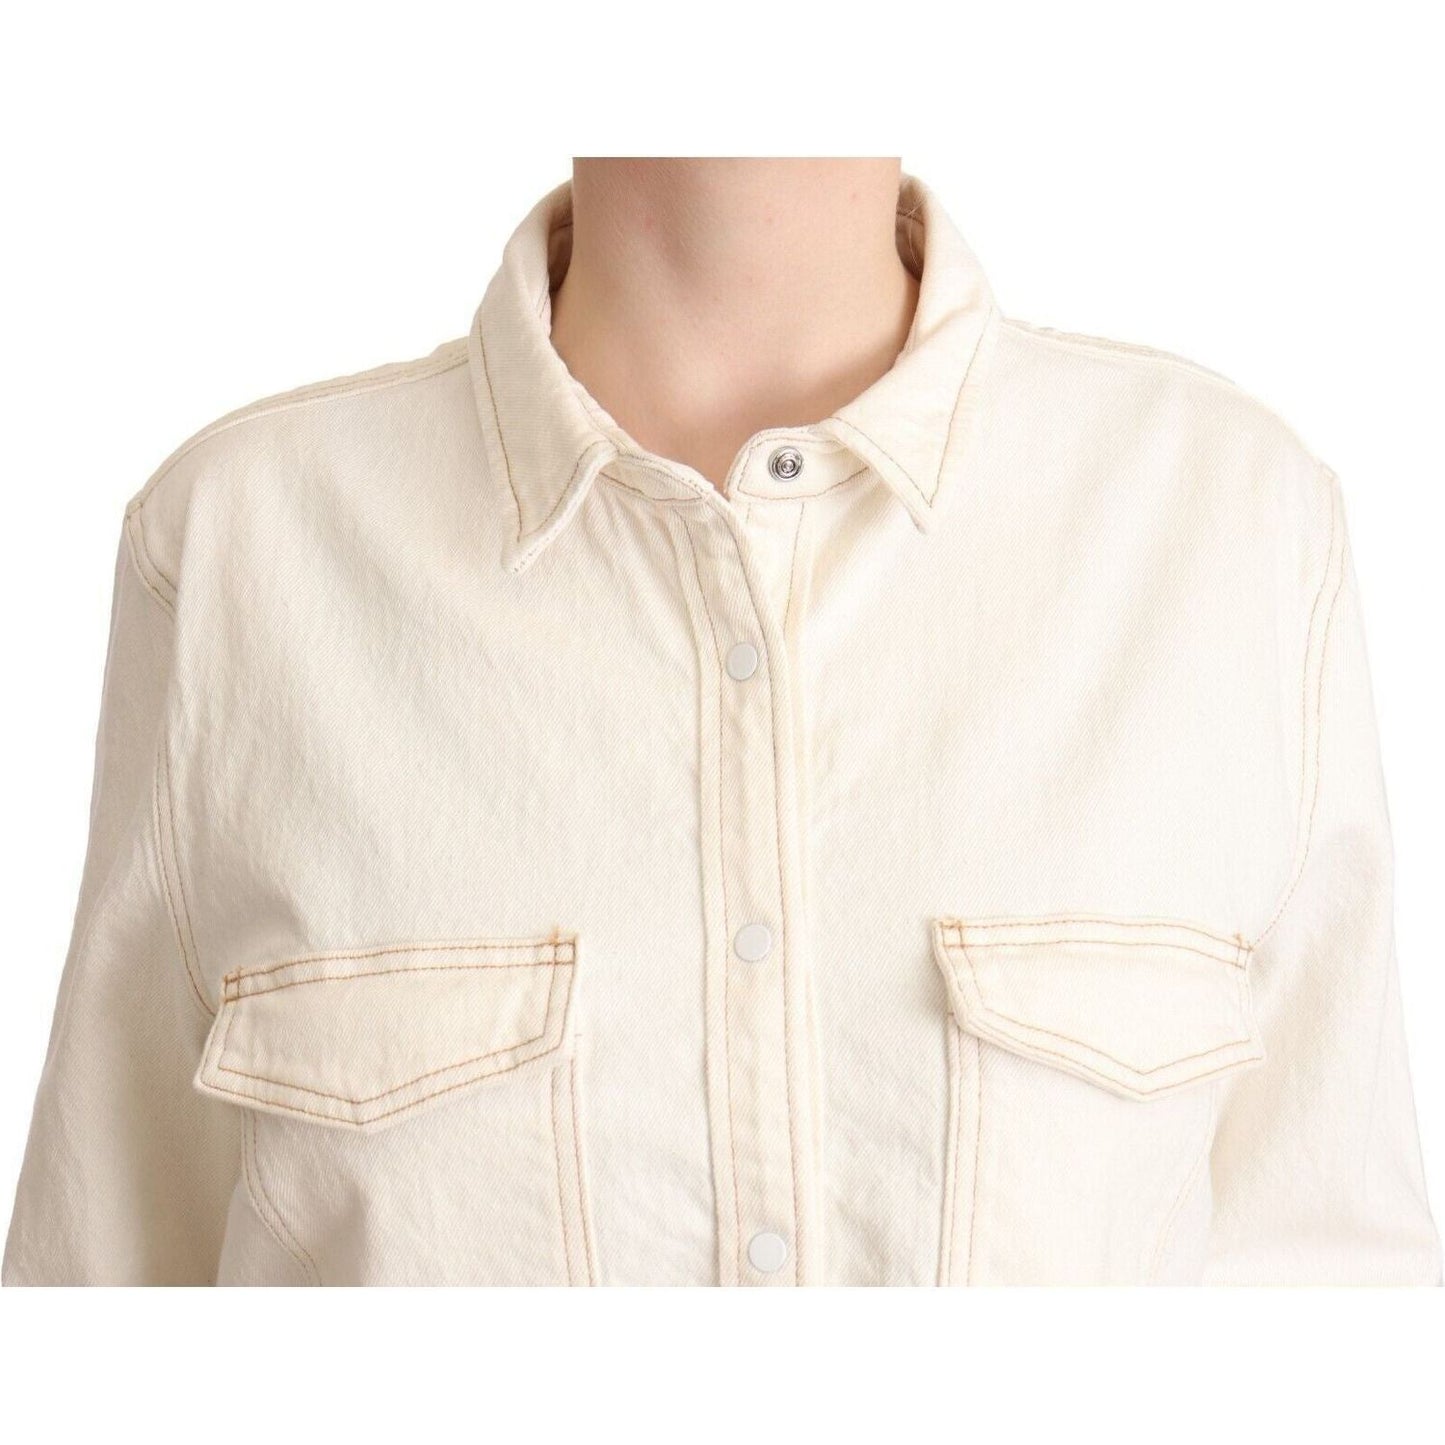 Levi's Elegant White Long Sleeve Collared Polo Top white-cotton-collared-long-sleeves-button-down-polo-top